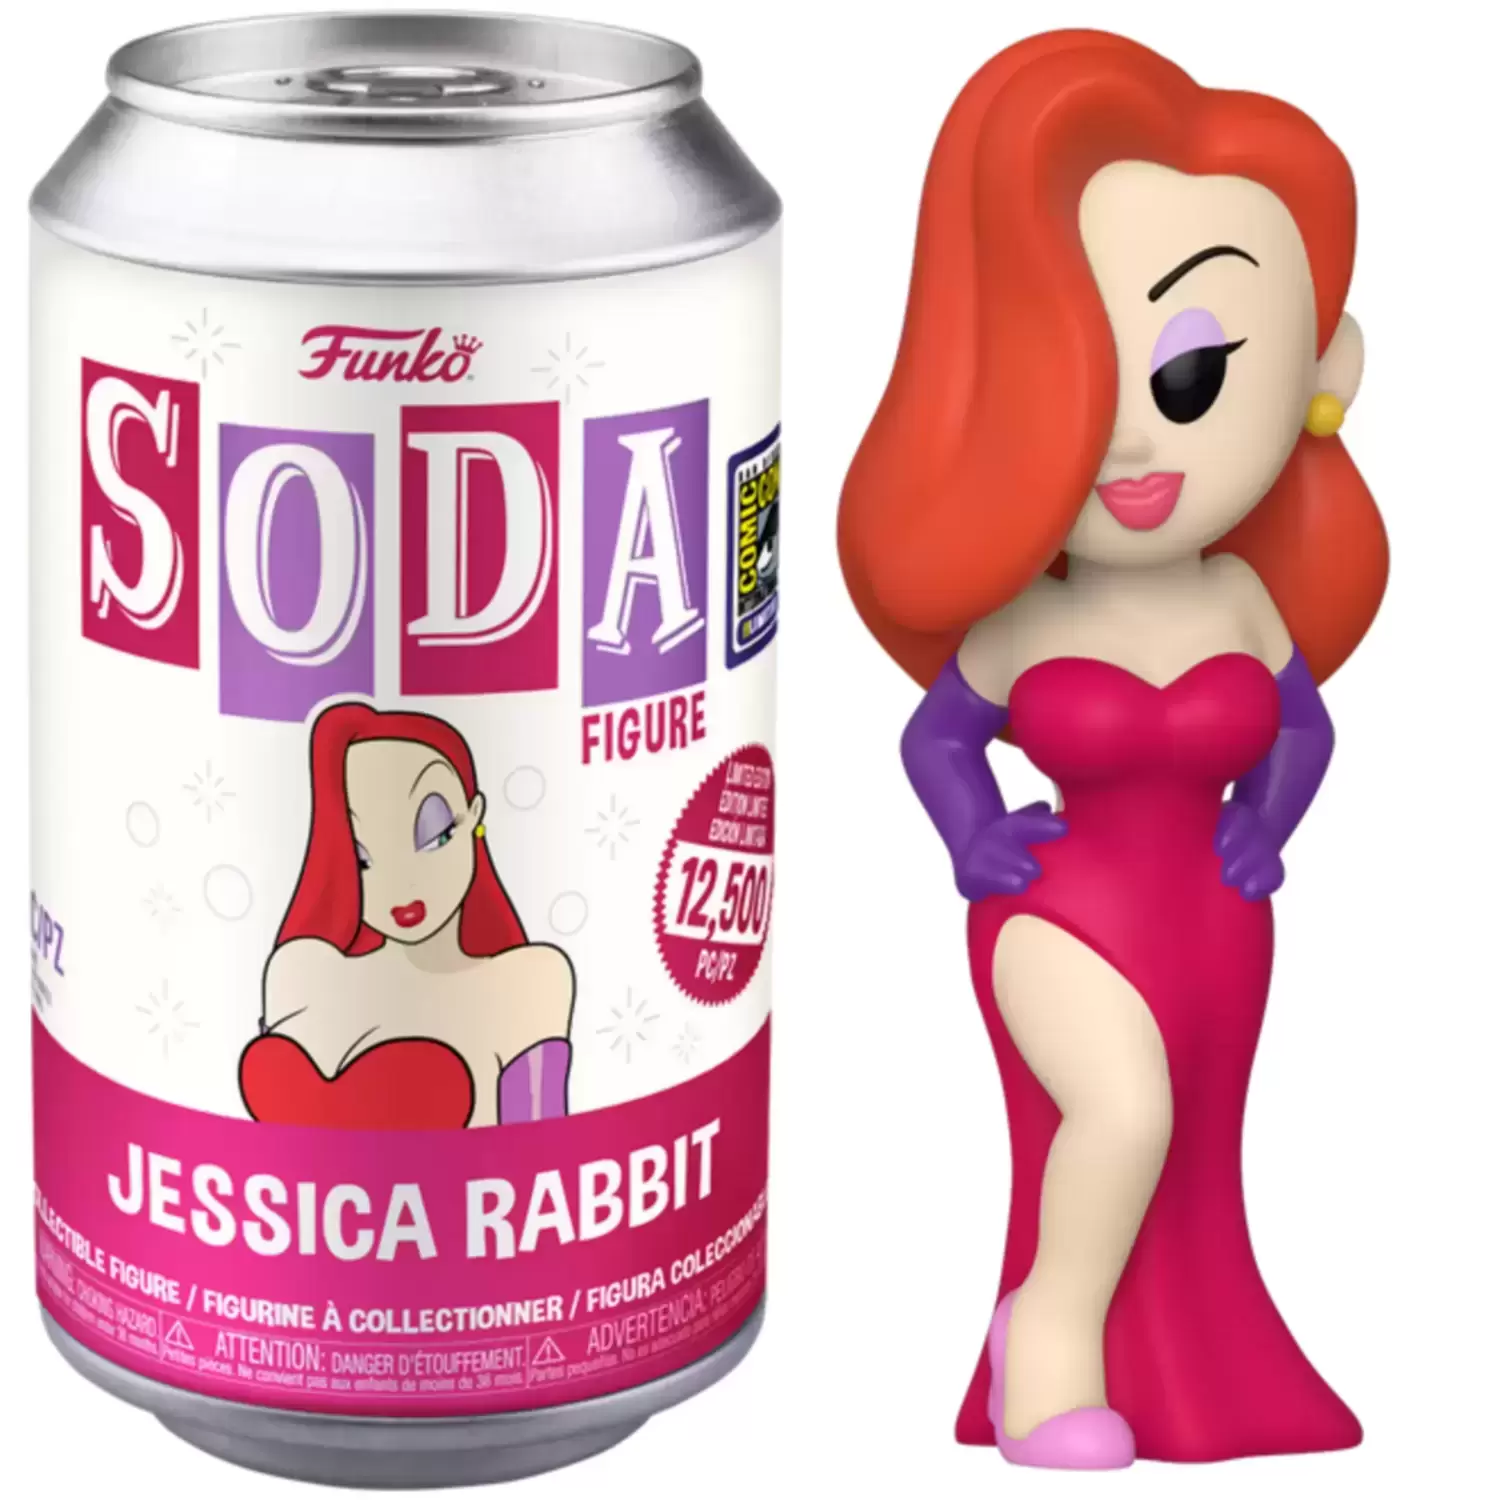 Vinyl Soda! - Roger Rabbit - Jessica Rabbit